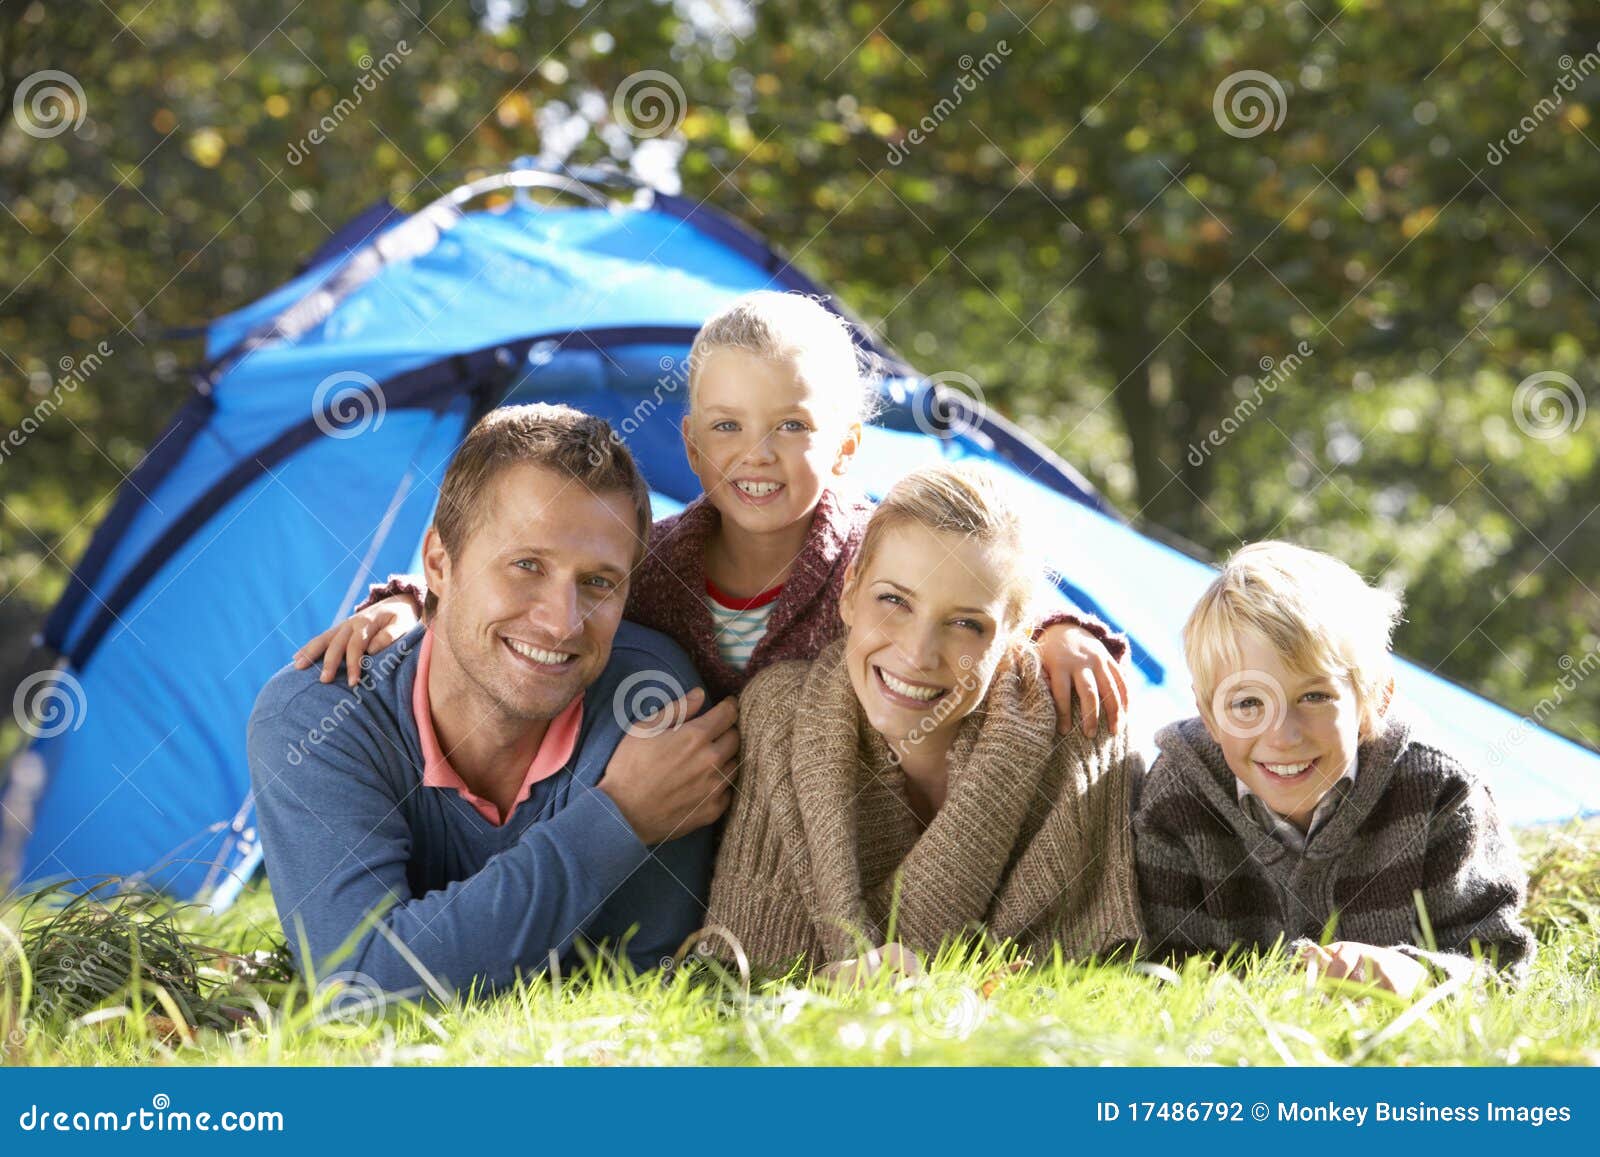 130 Best Outdoor Family photos ideas  family photos outdoor family  photos family photoshoot